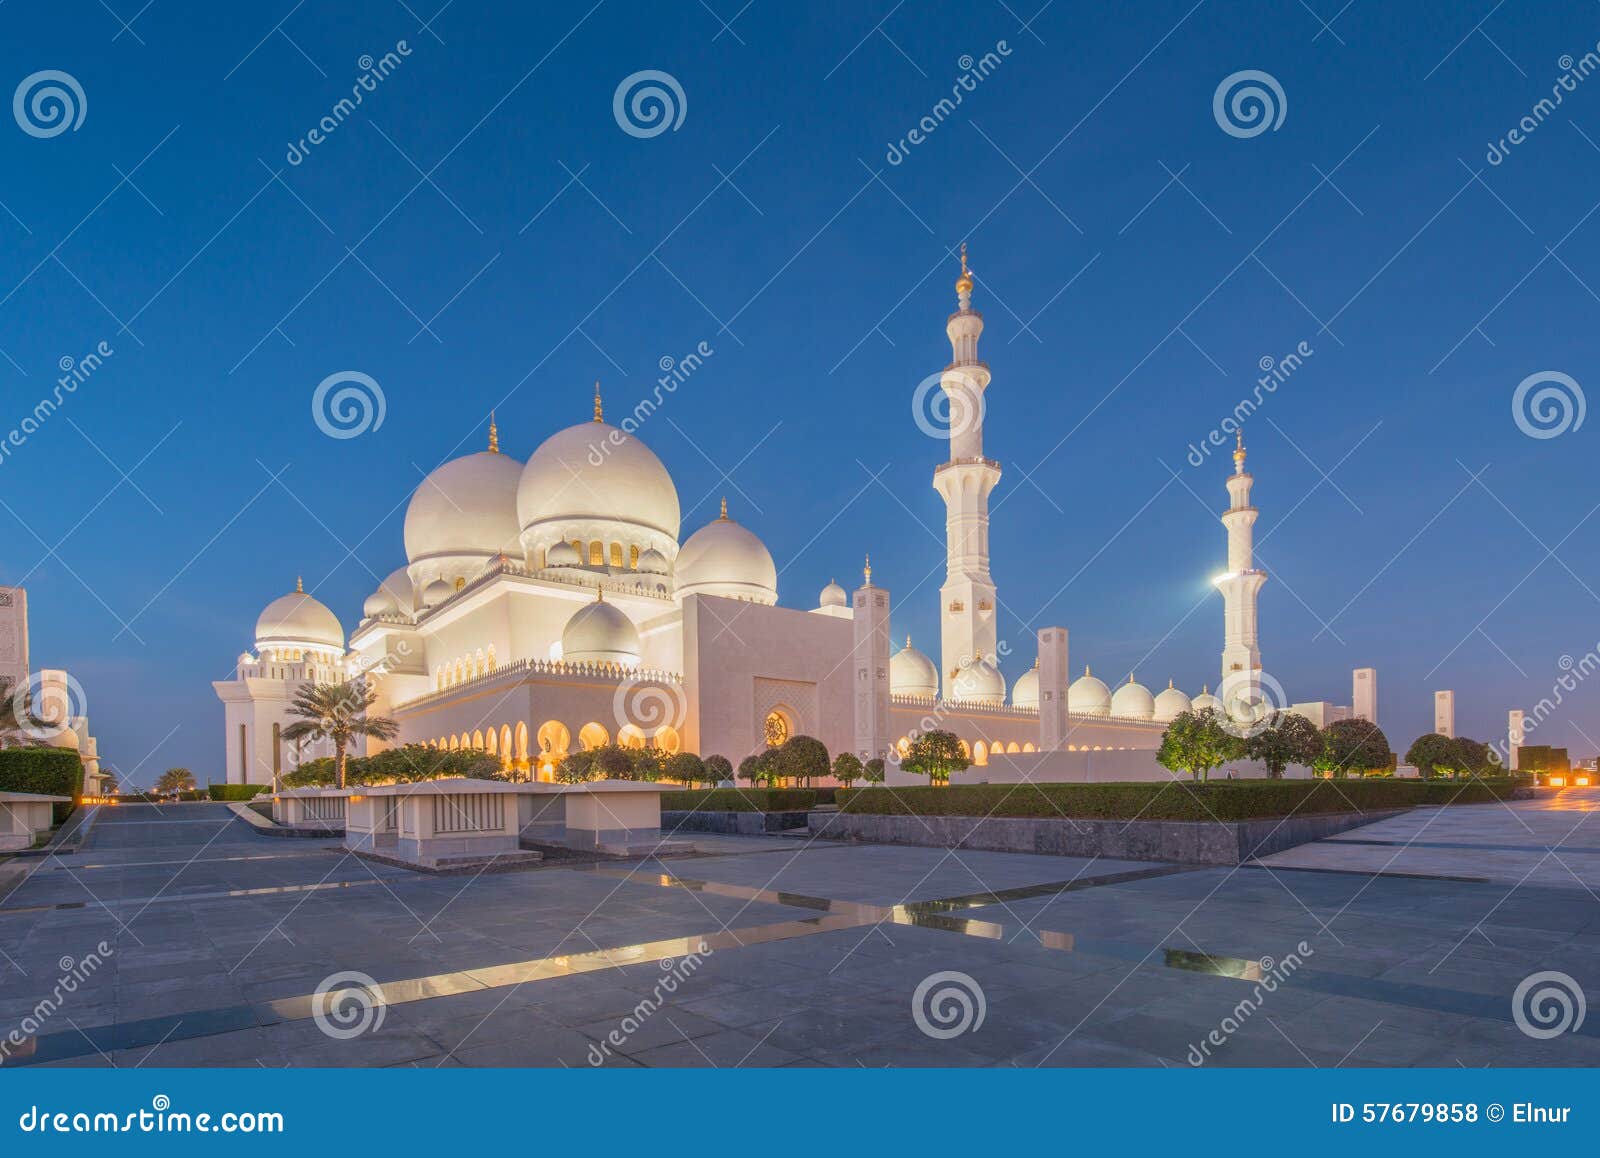 sheikh zayed mosque in abu dabi